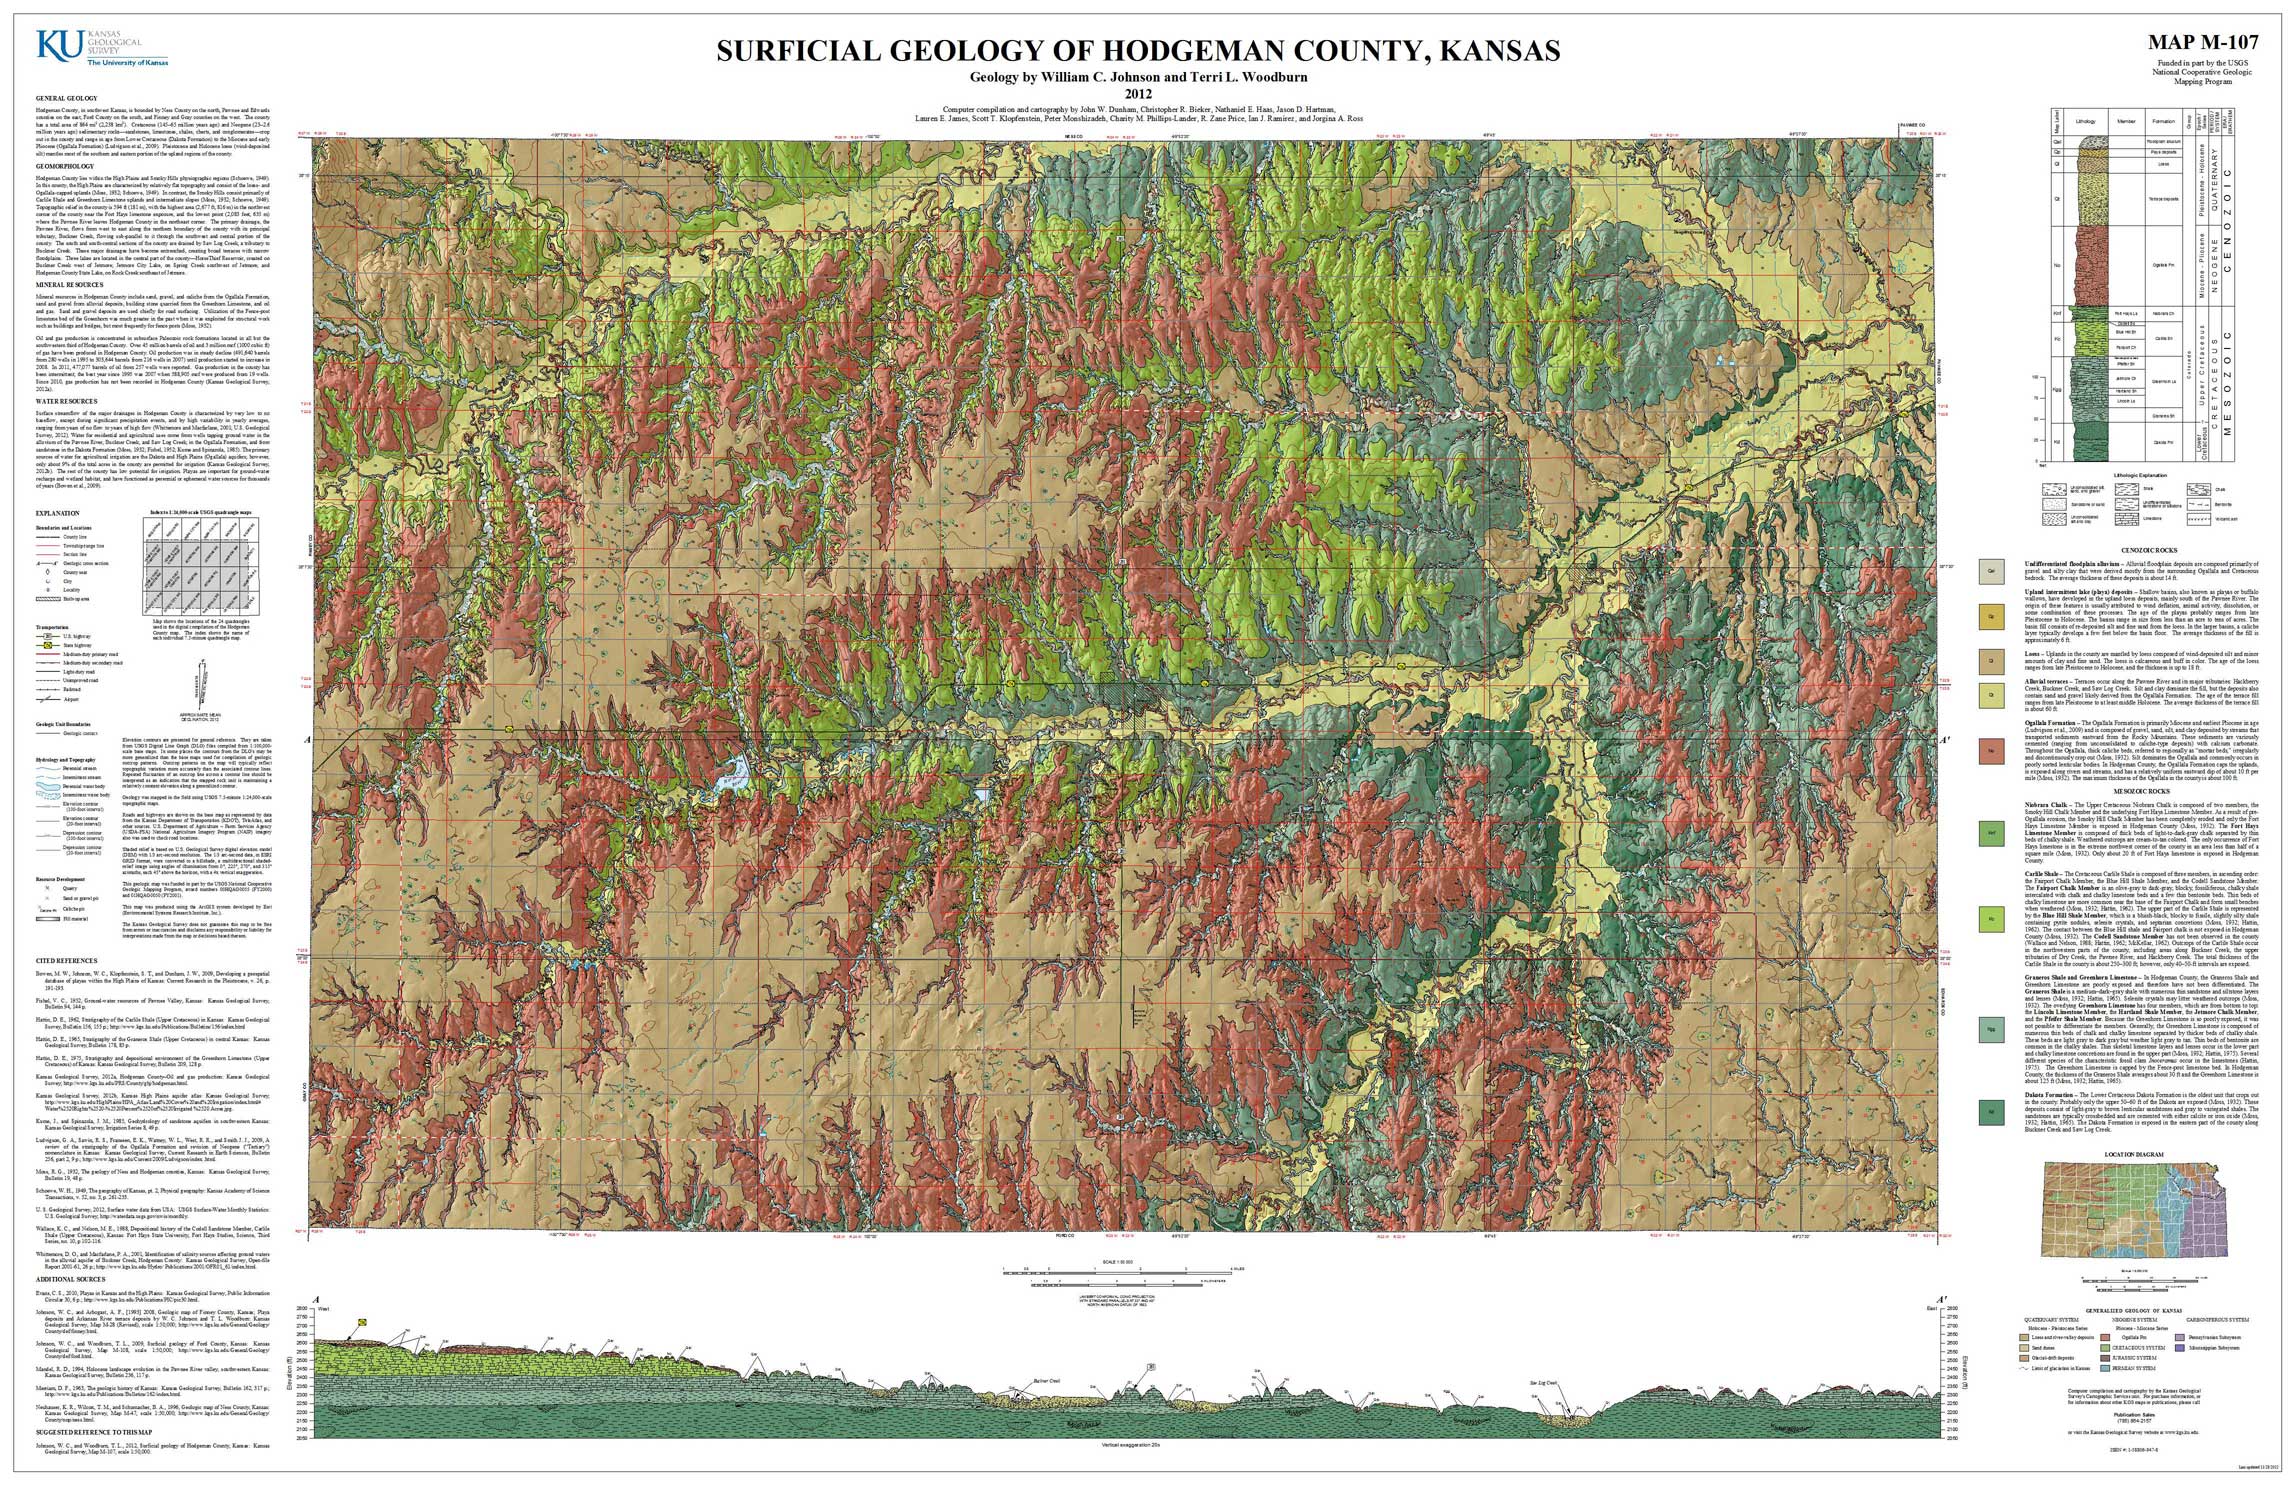 Hodgeman County geologic map